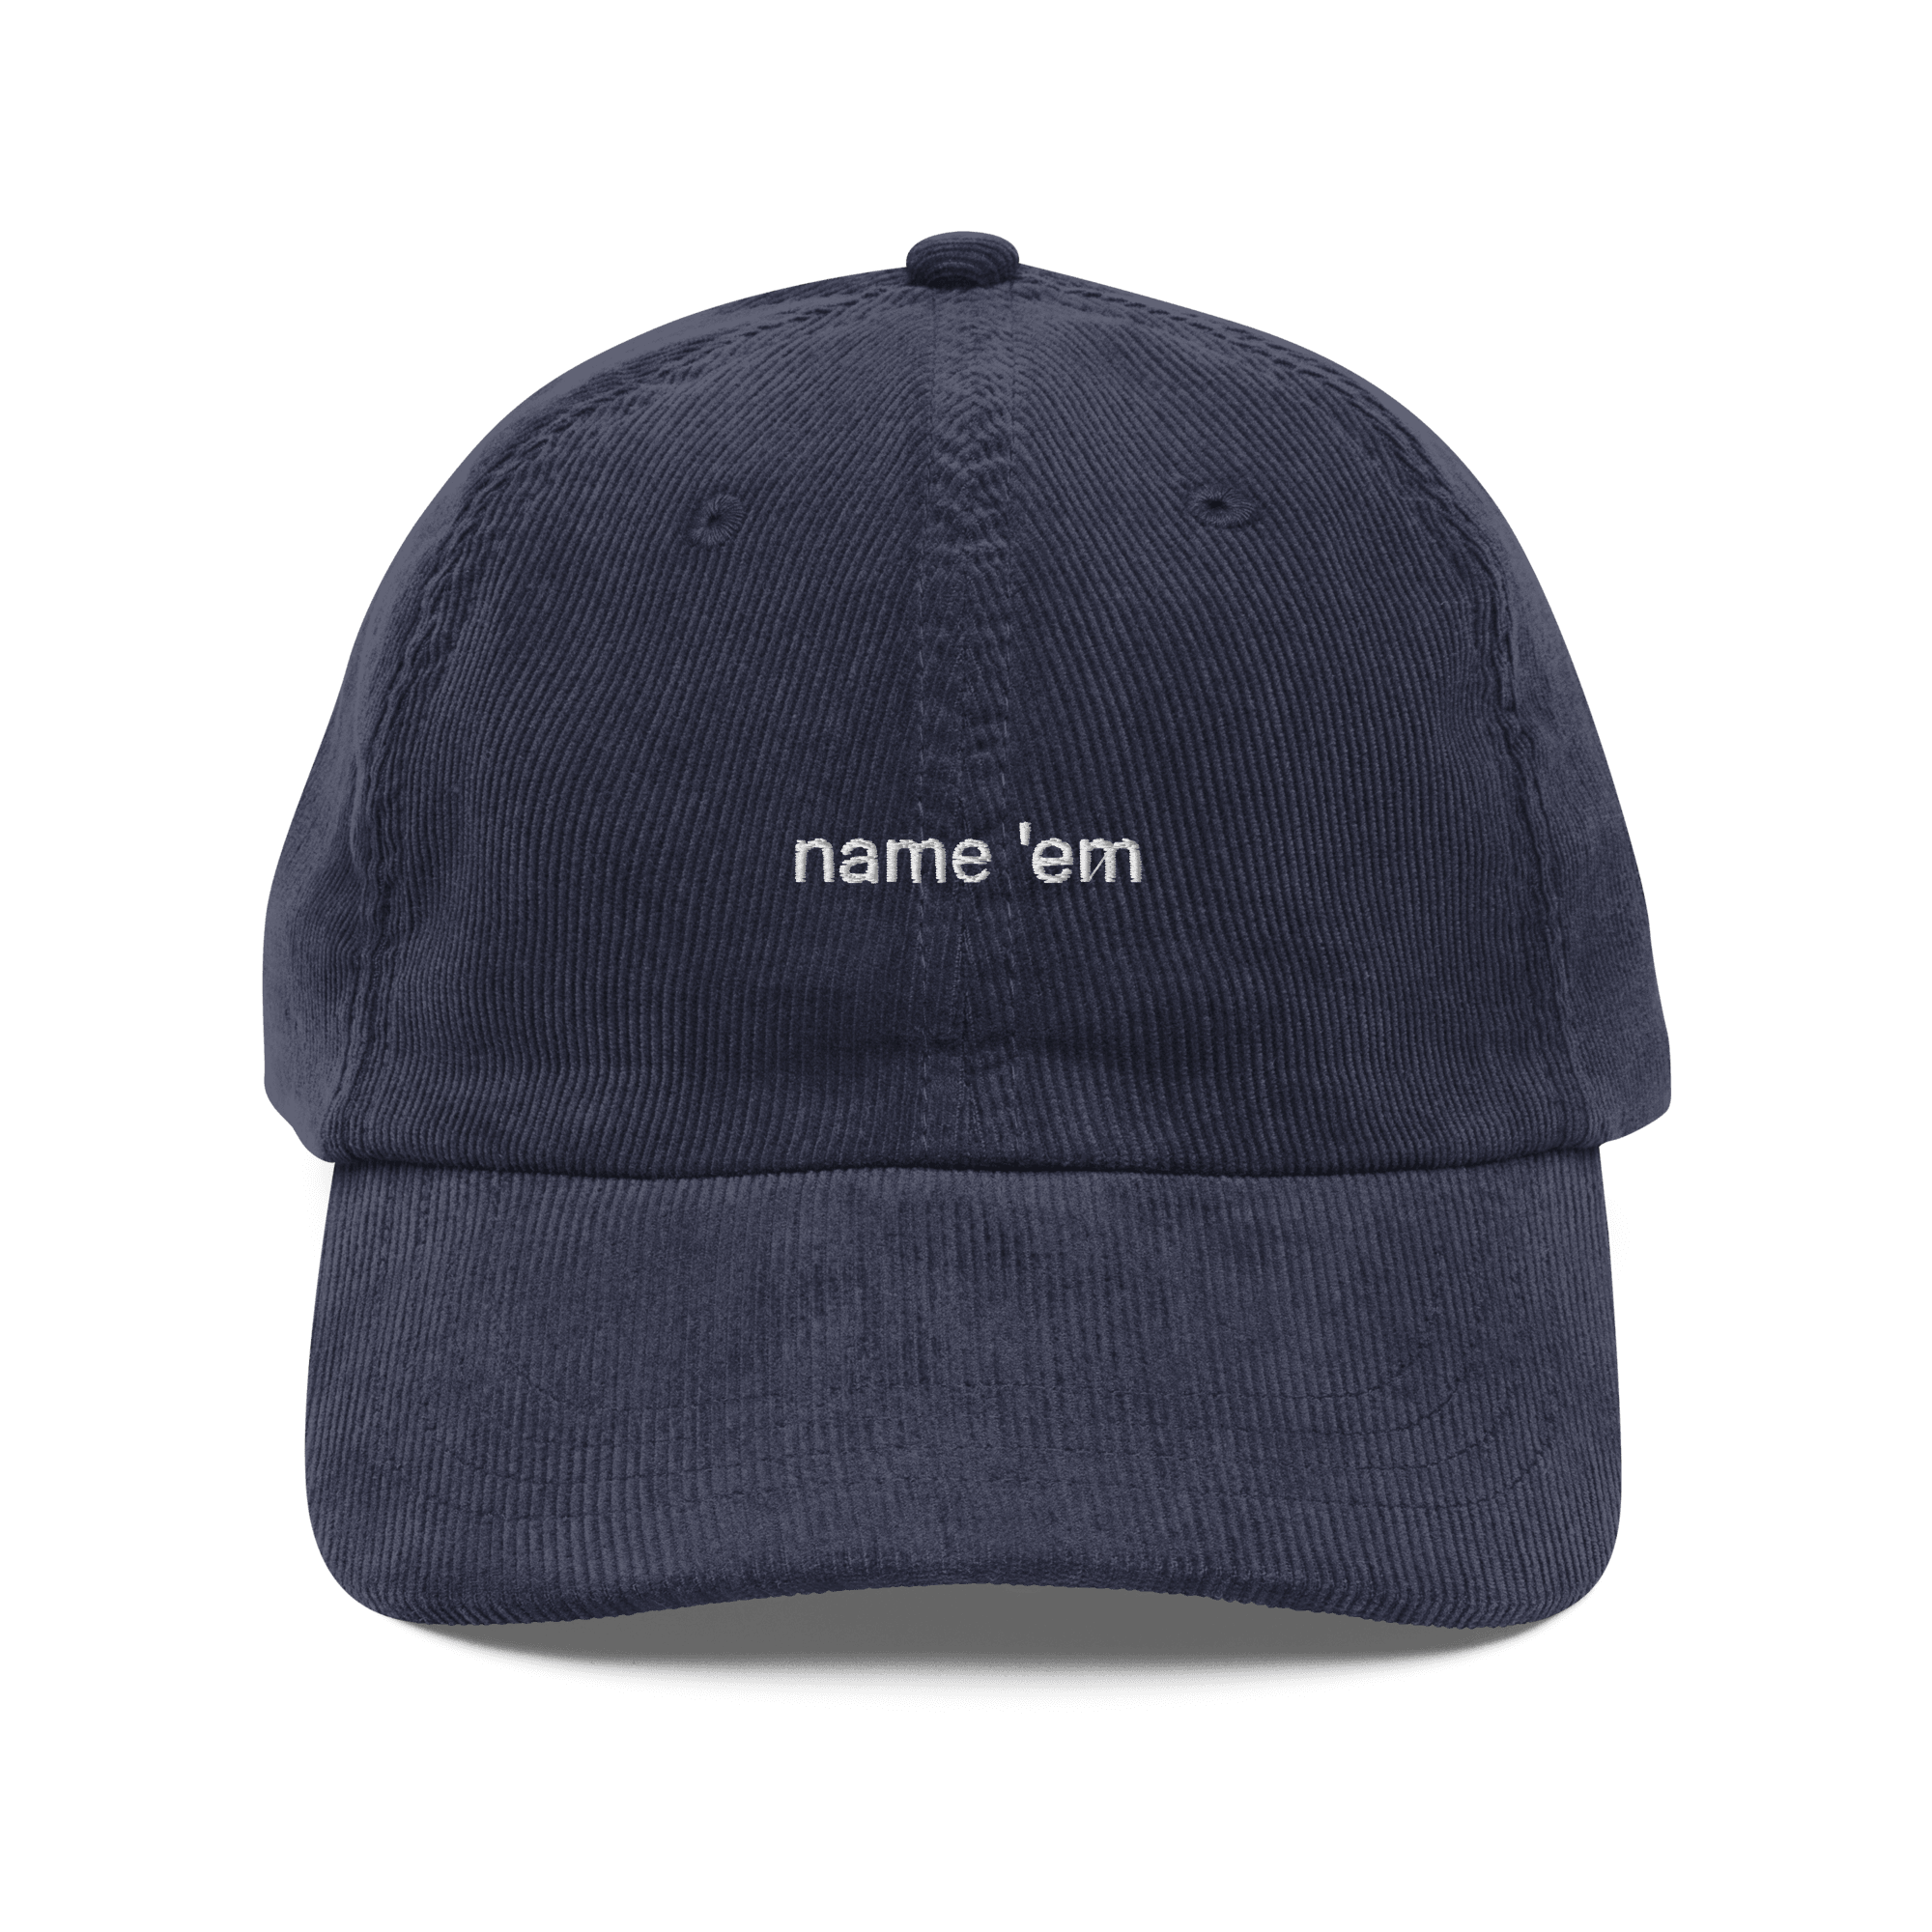 Name 'em Embroidered Corduroy Hat - Polychrome Goods 🍊